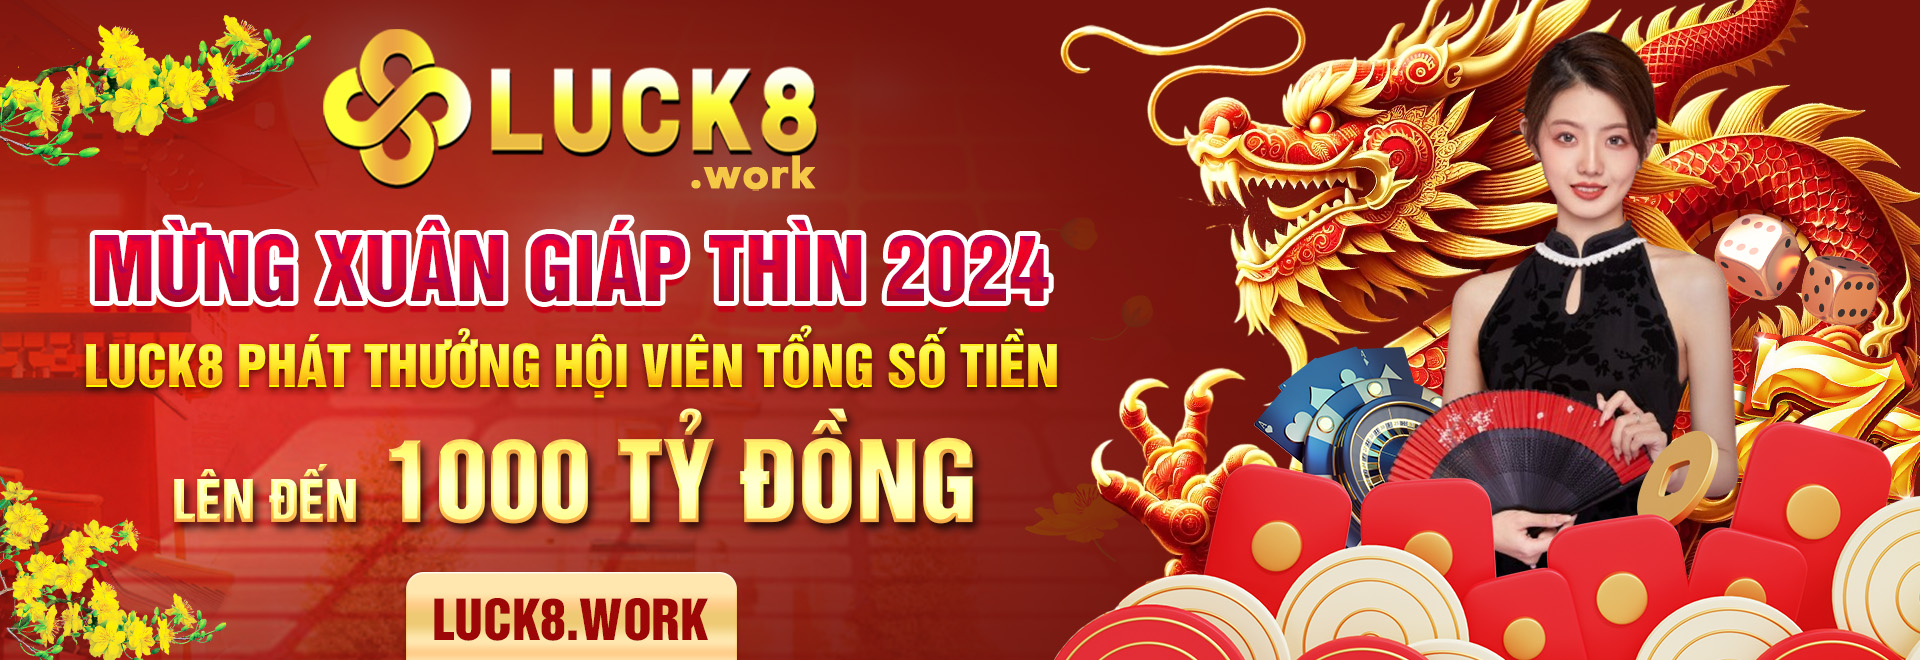 1-mung-xuan-giap-thin-2024-luck8-phat-thuong-hoi-vien-tong-so-tien-len-den-1000-ty-dong